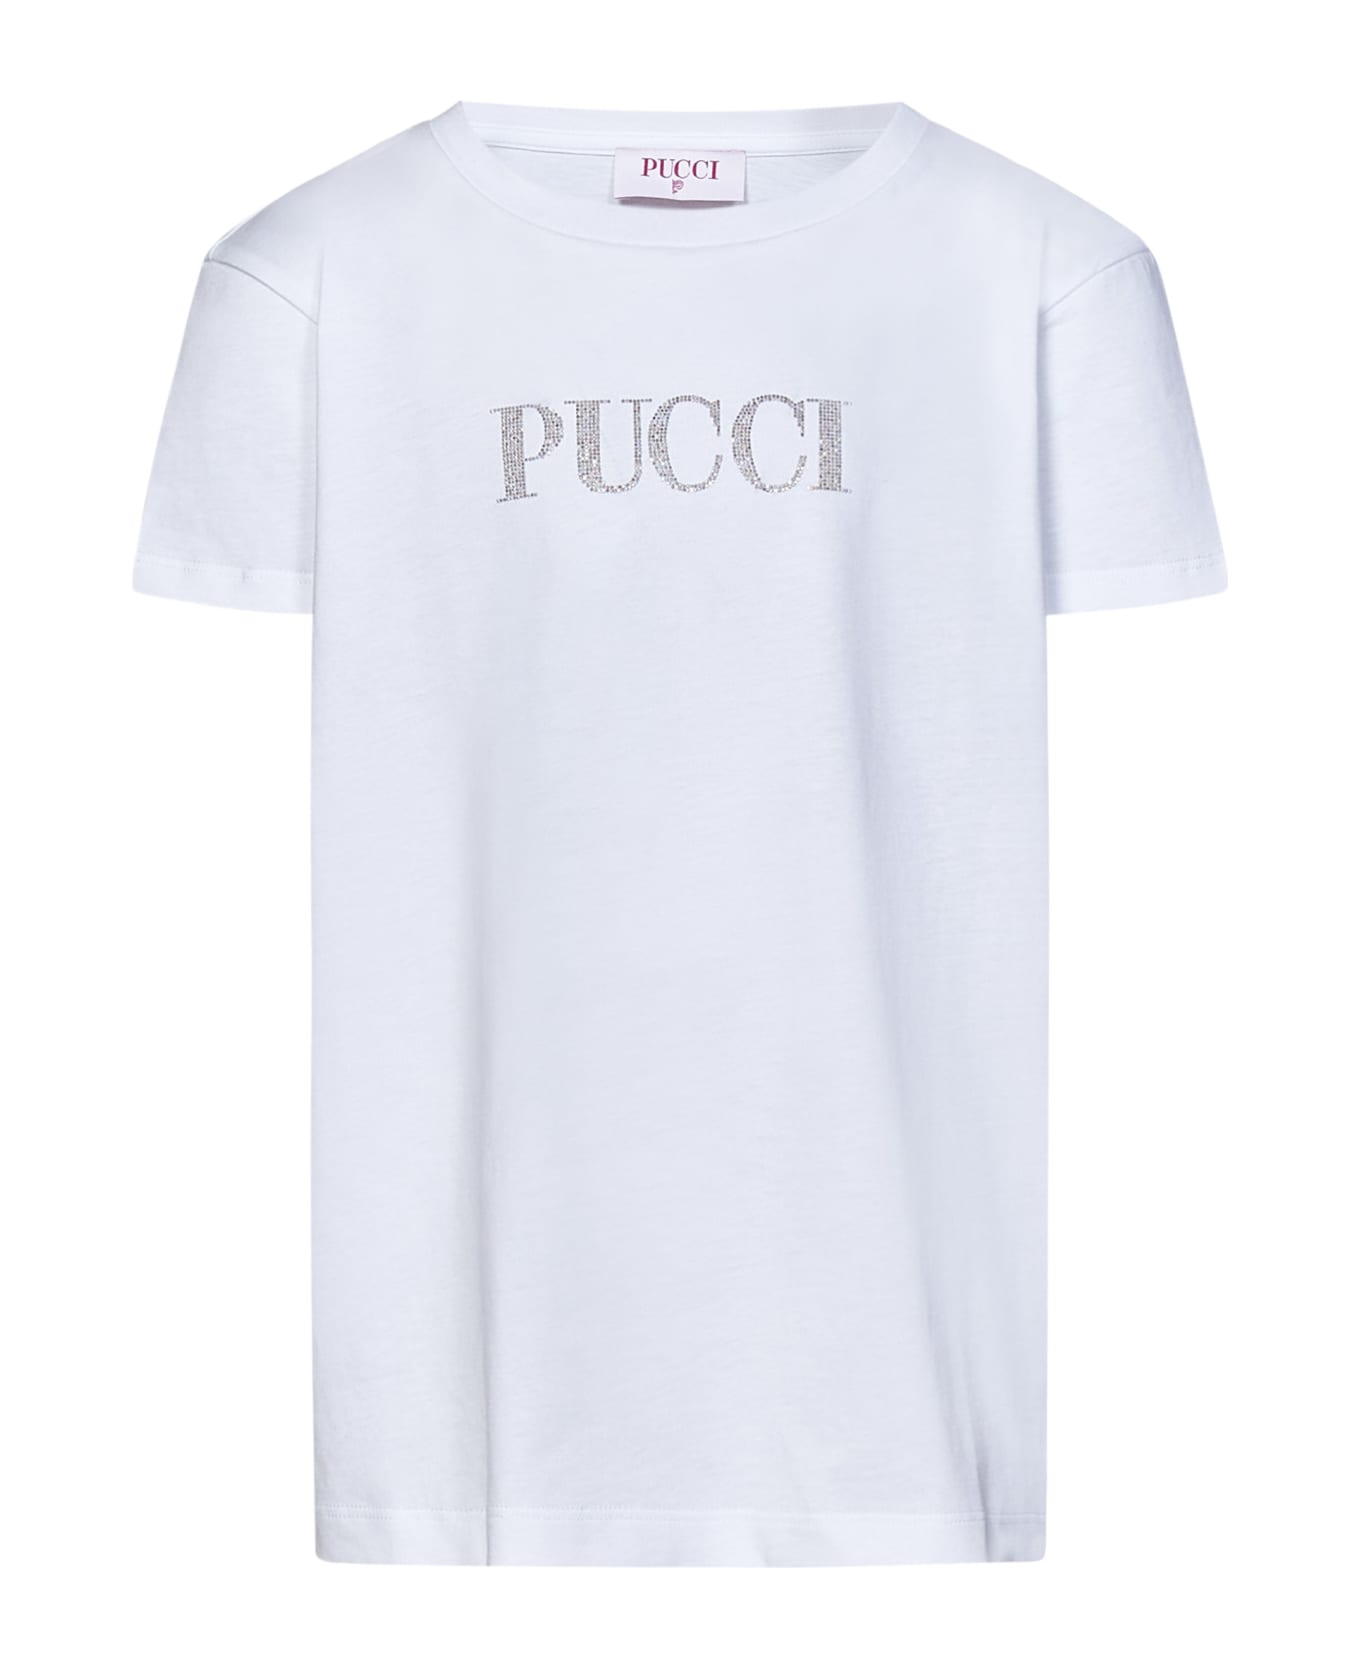 Pucci Emilio  Kids T-shirt - White